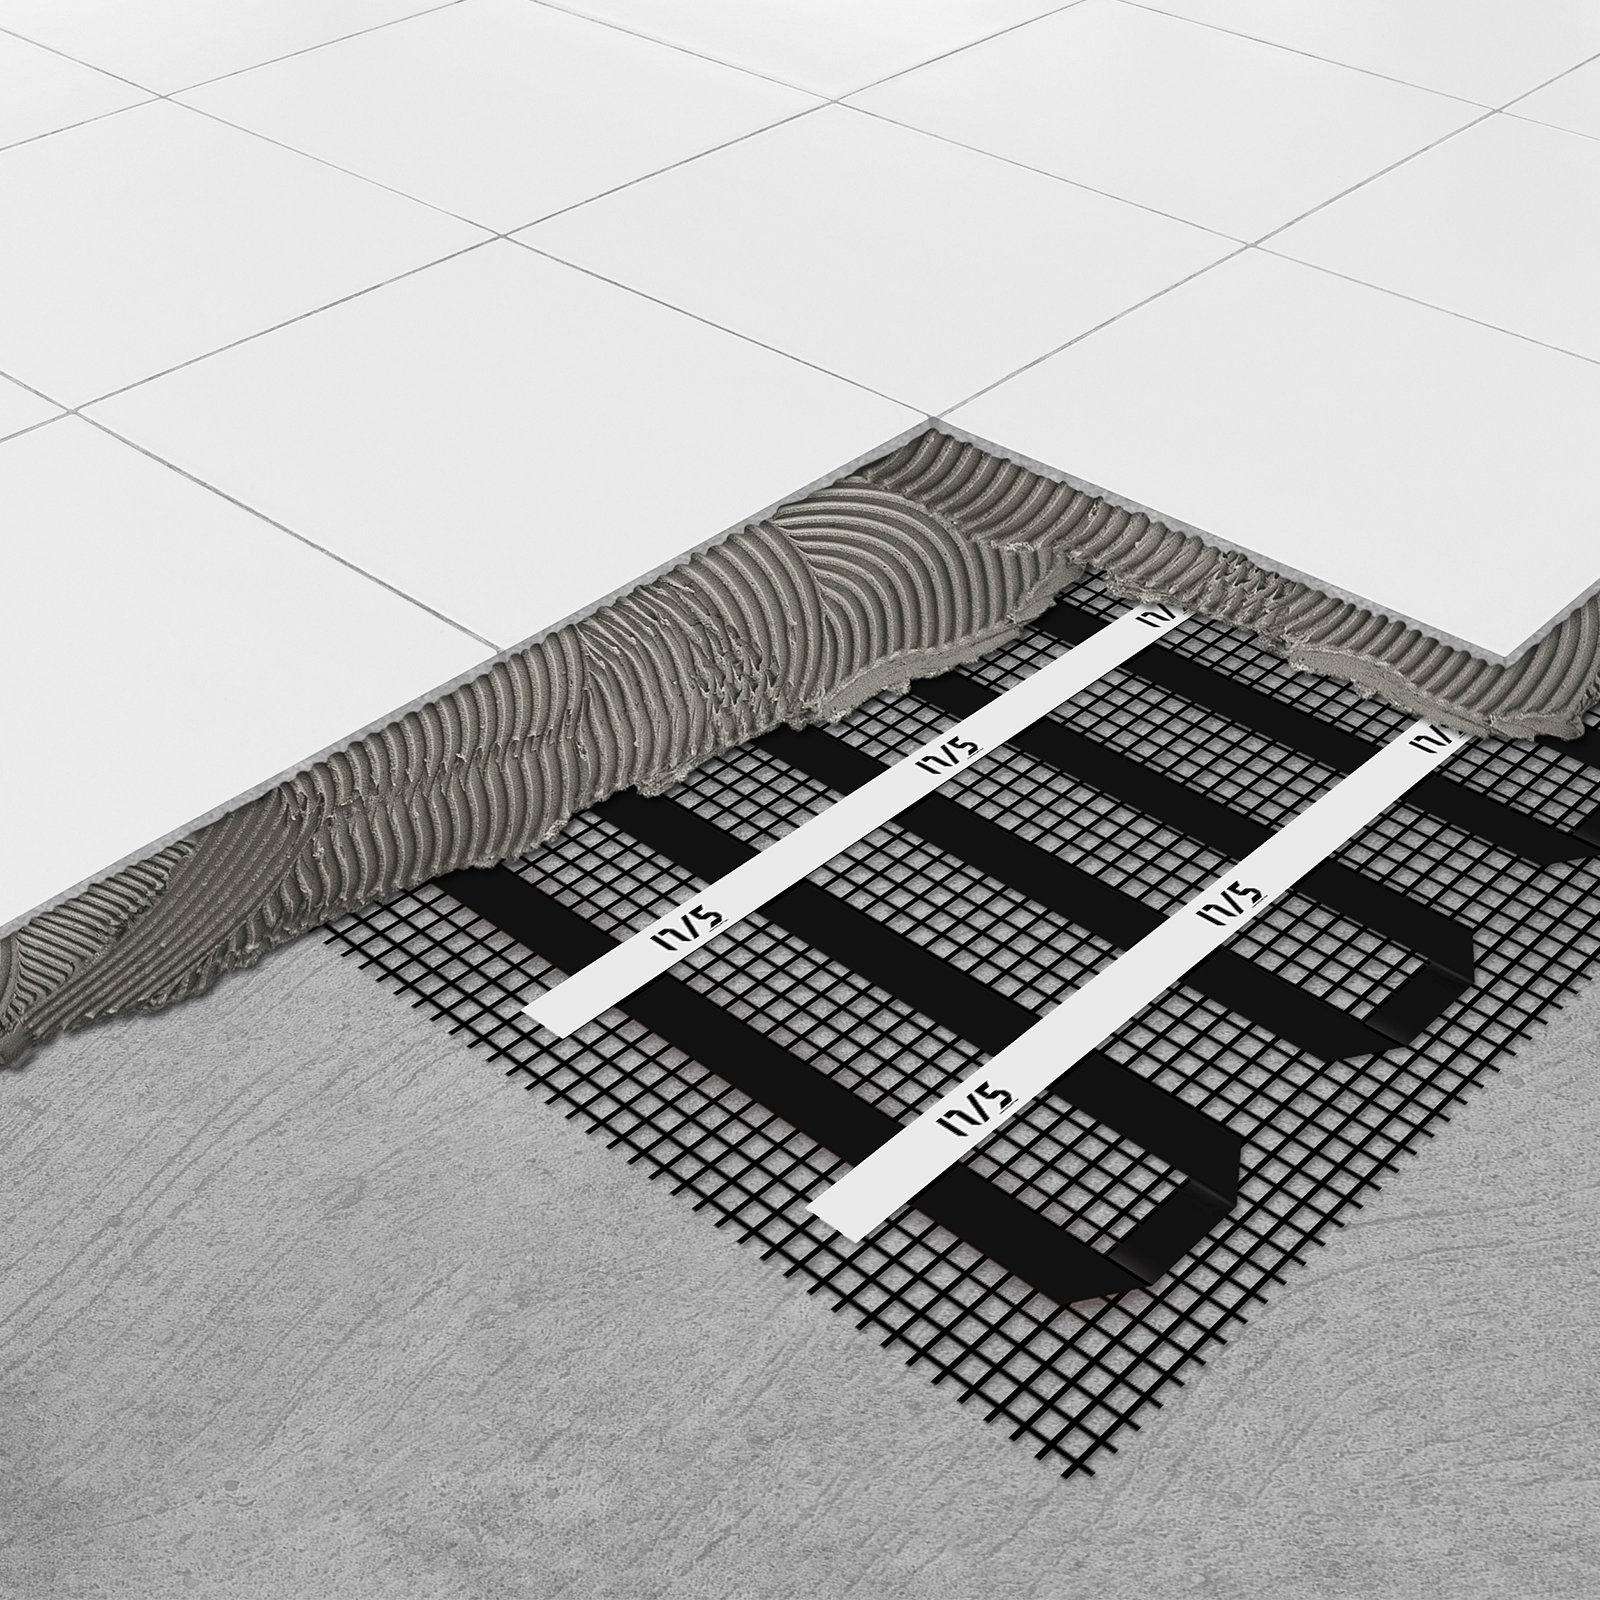 Electric underfloor heating with duck bed heating mat under tiles